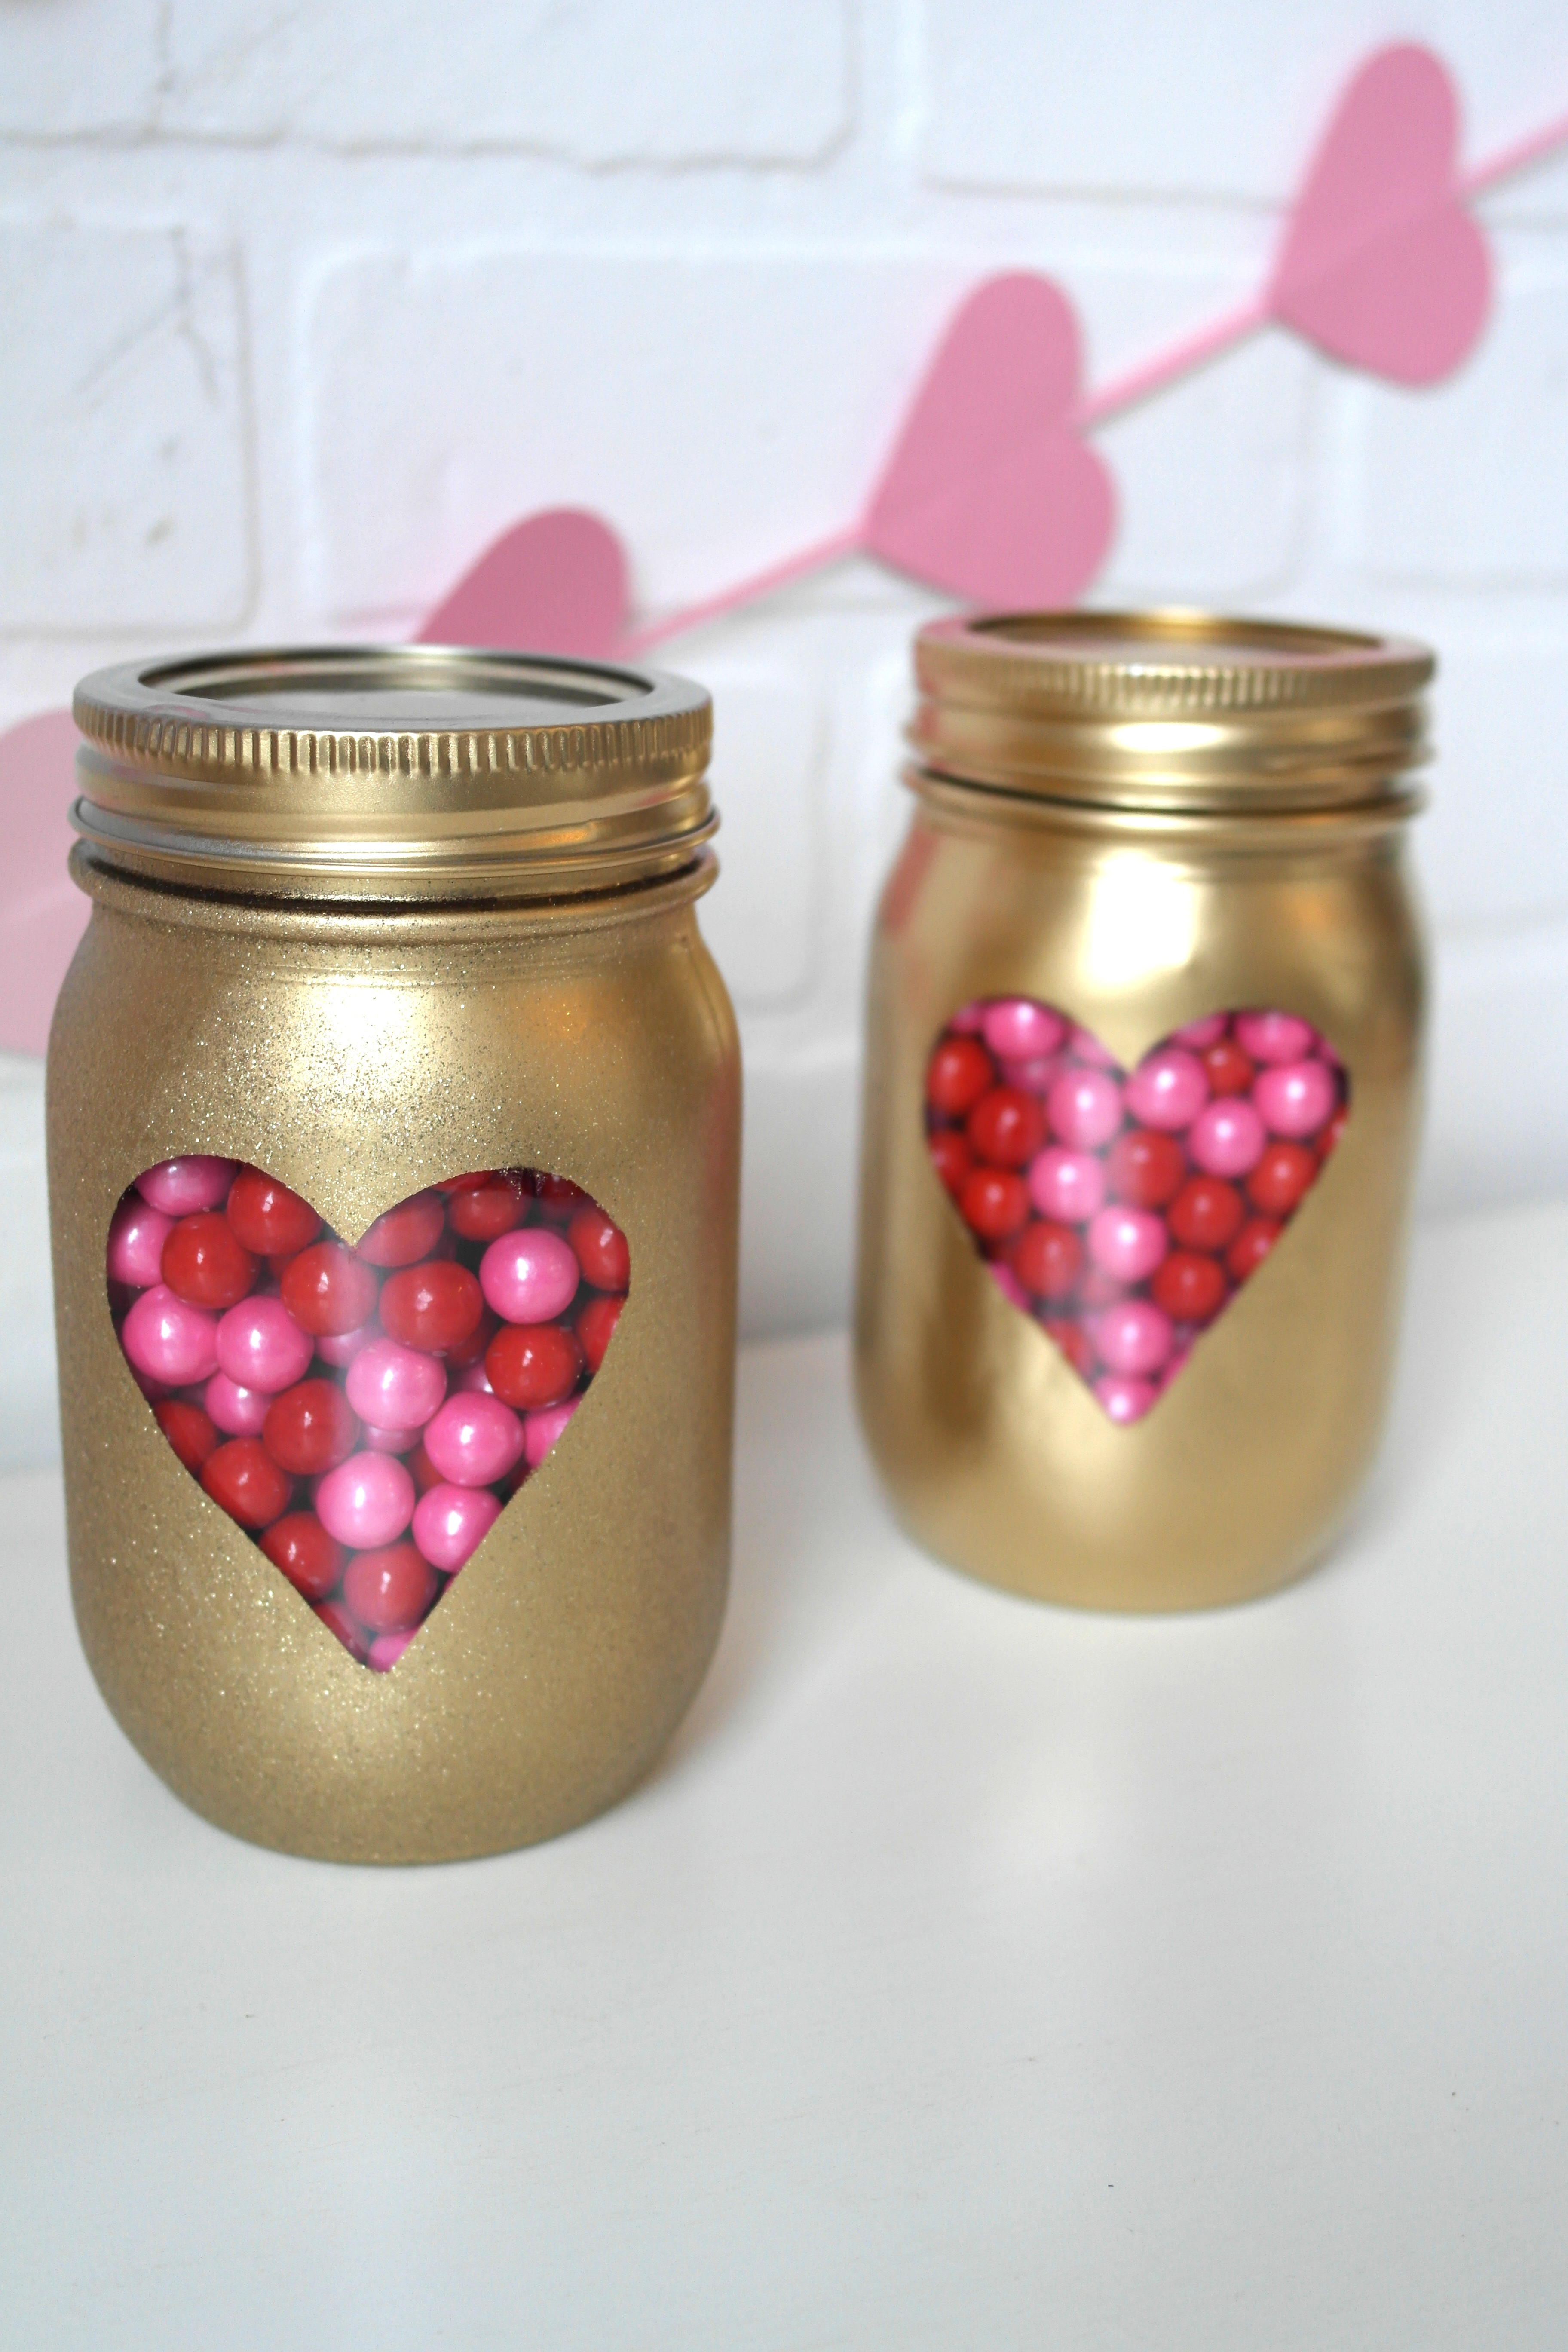 Best ideas about Mason Jar DIY
. Save or Pin DIY Valentine s Day Mason Jars Now.